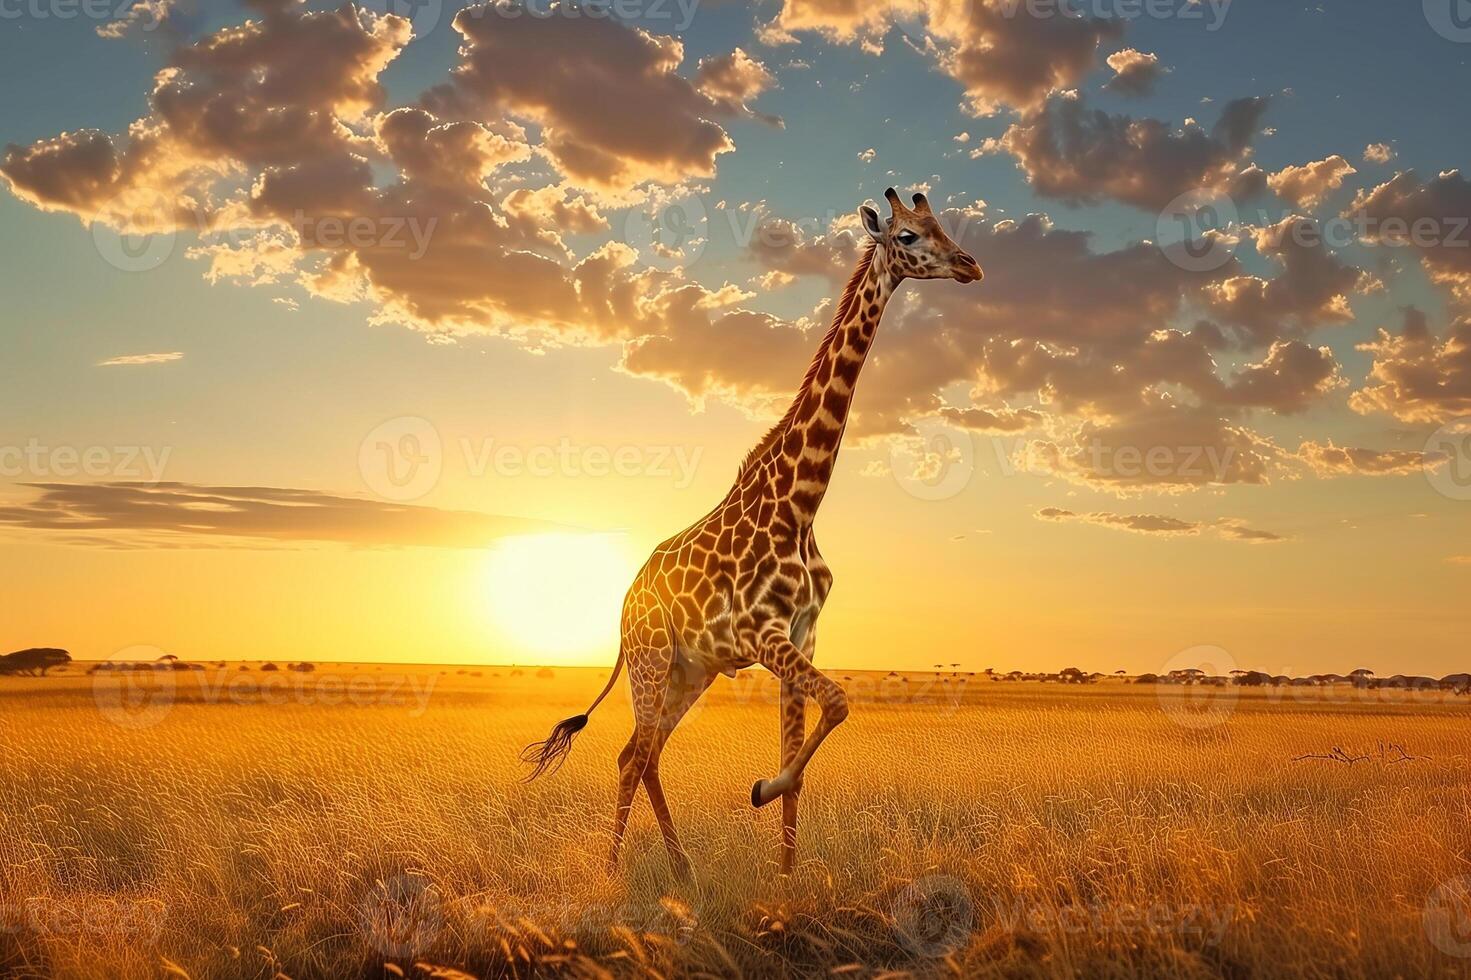 ai gegenereerd giraffe Bij savanne Aan zonsondergang hemel.generatief ai foto